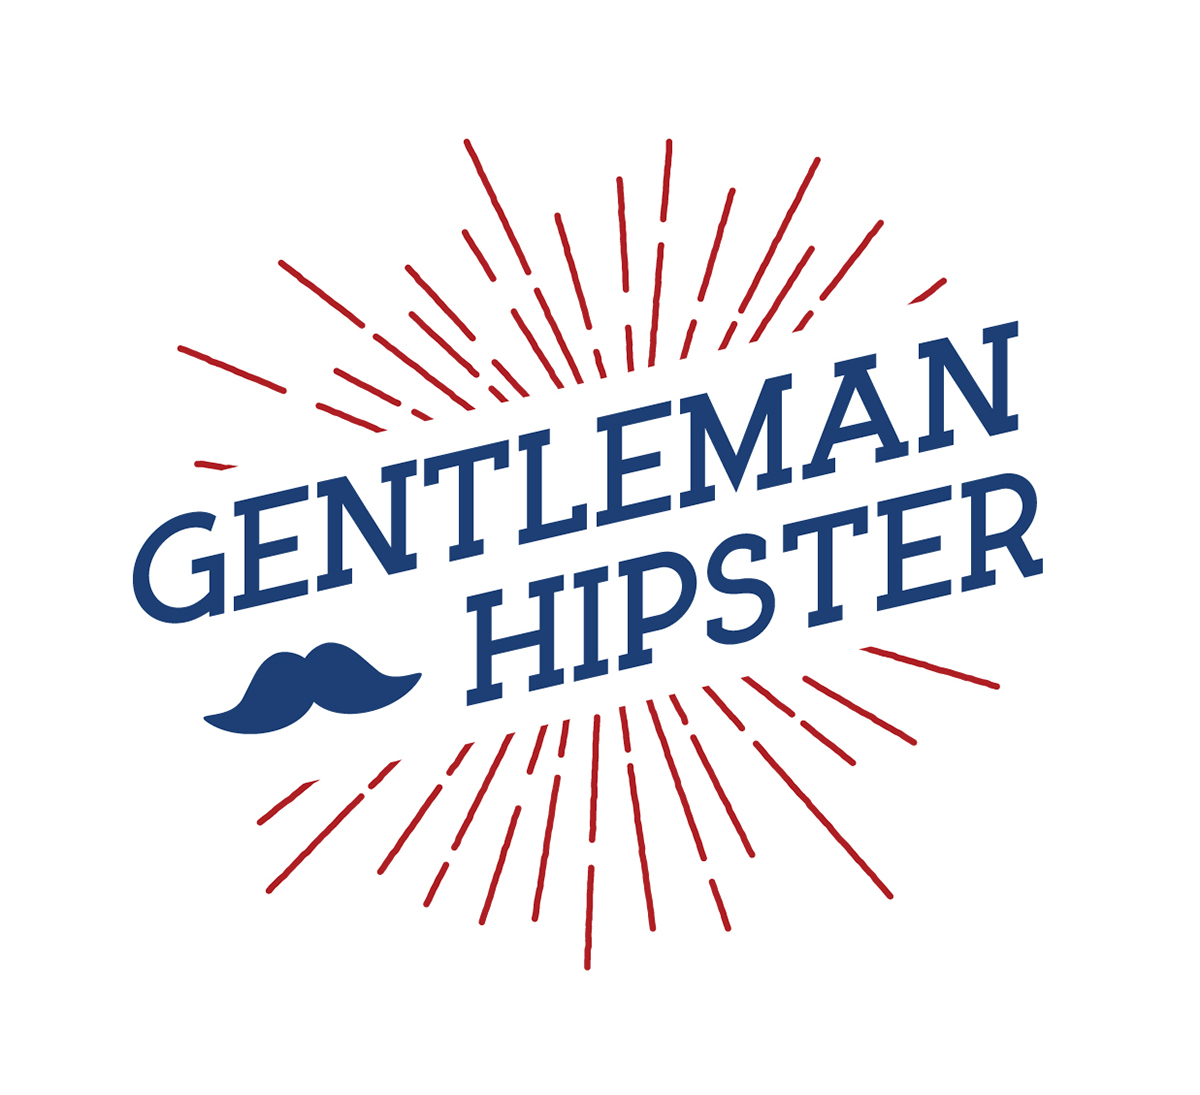 Gentleman Hipster